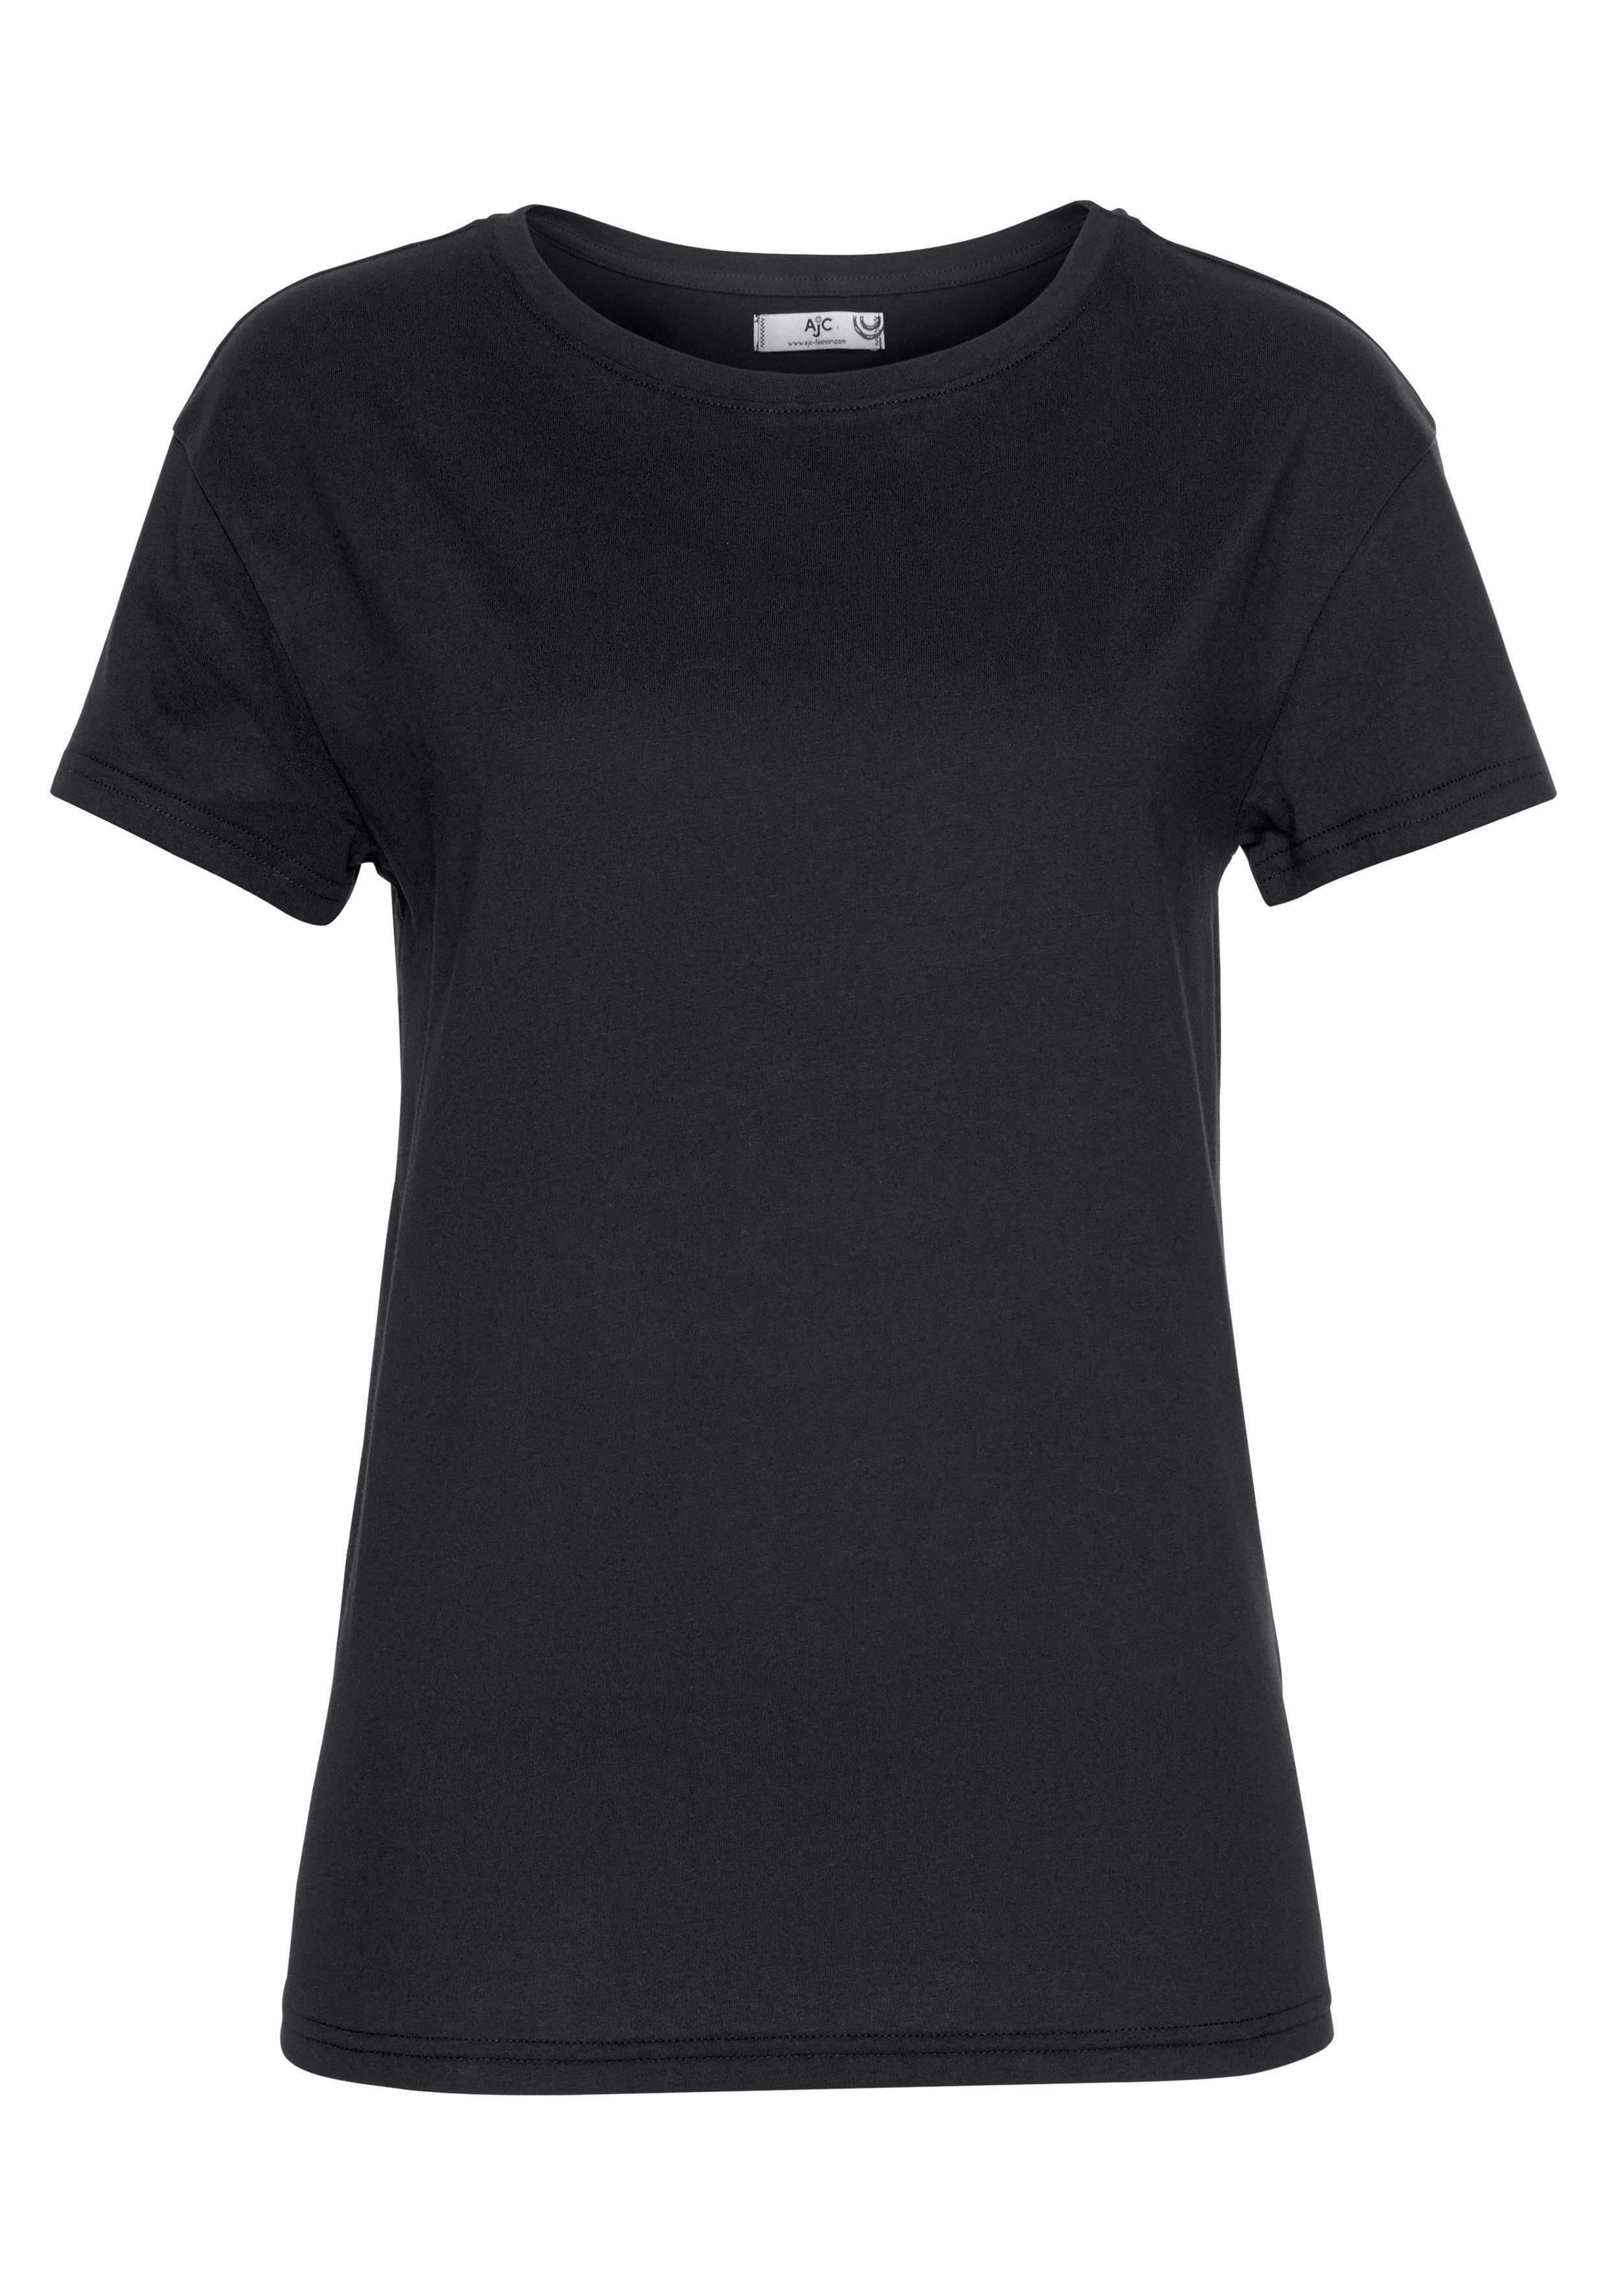 AJC T-Shirt im trendigen KOLLEKTION NEUE Oversized-Look schwarz 